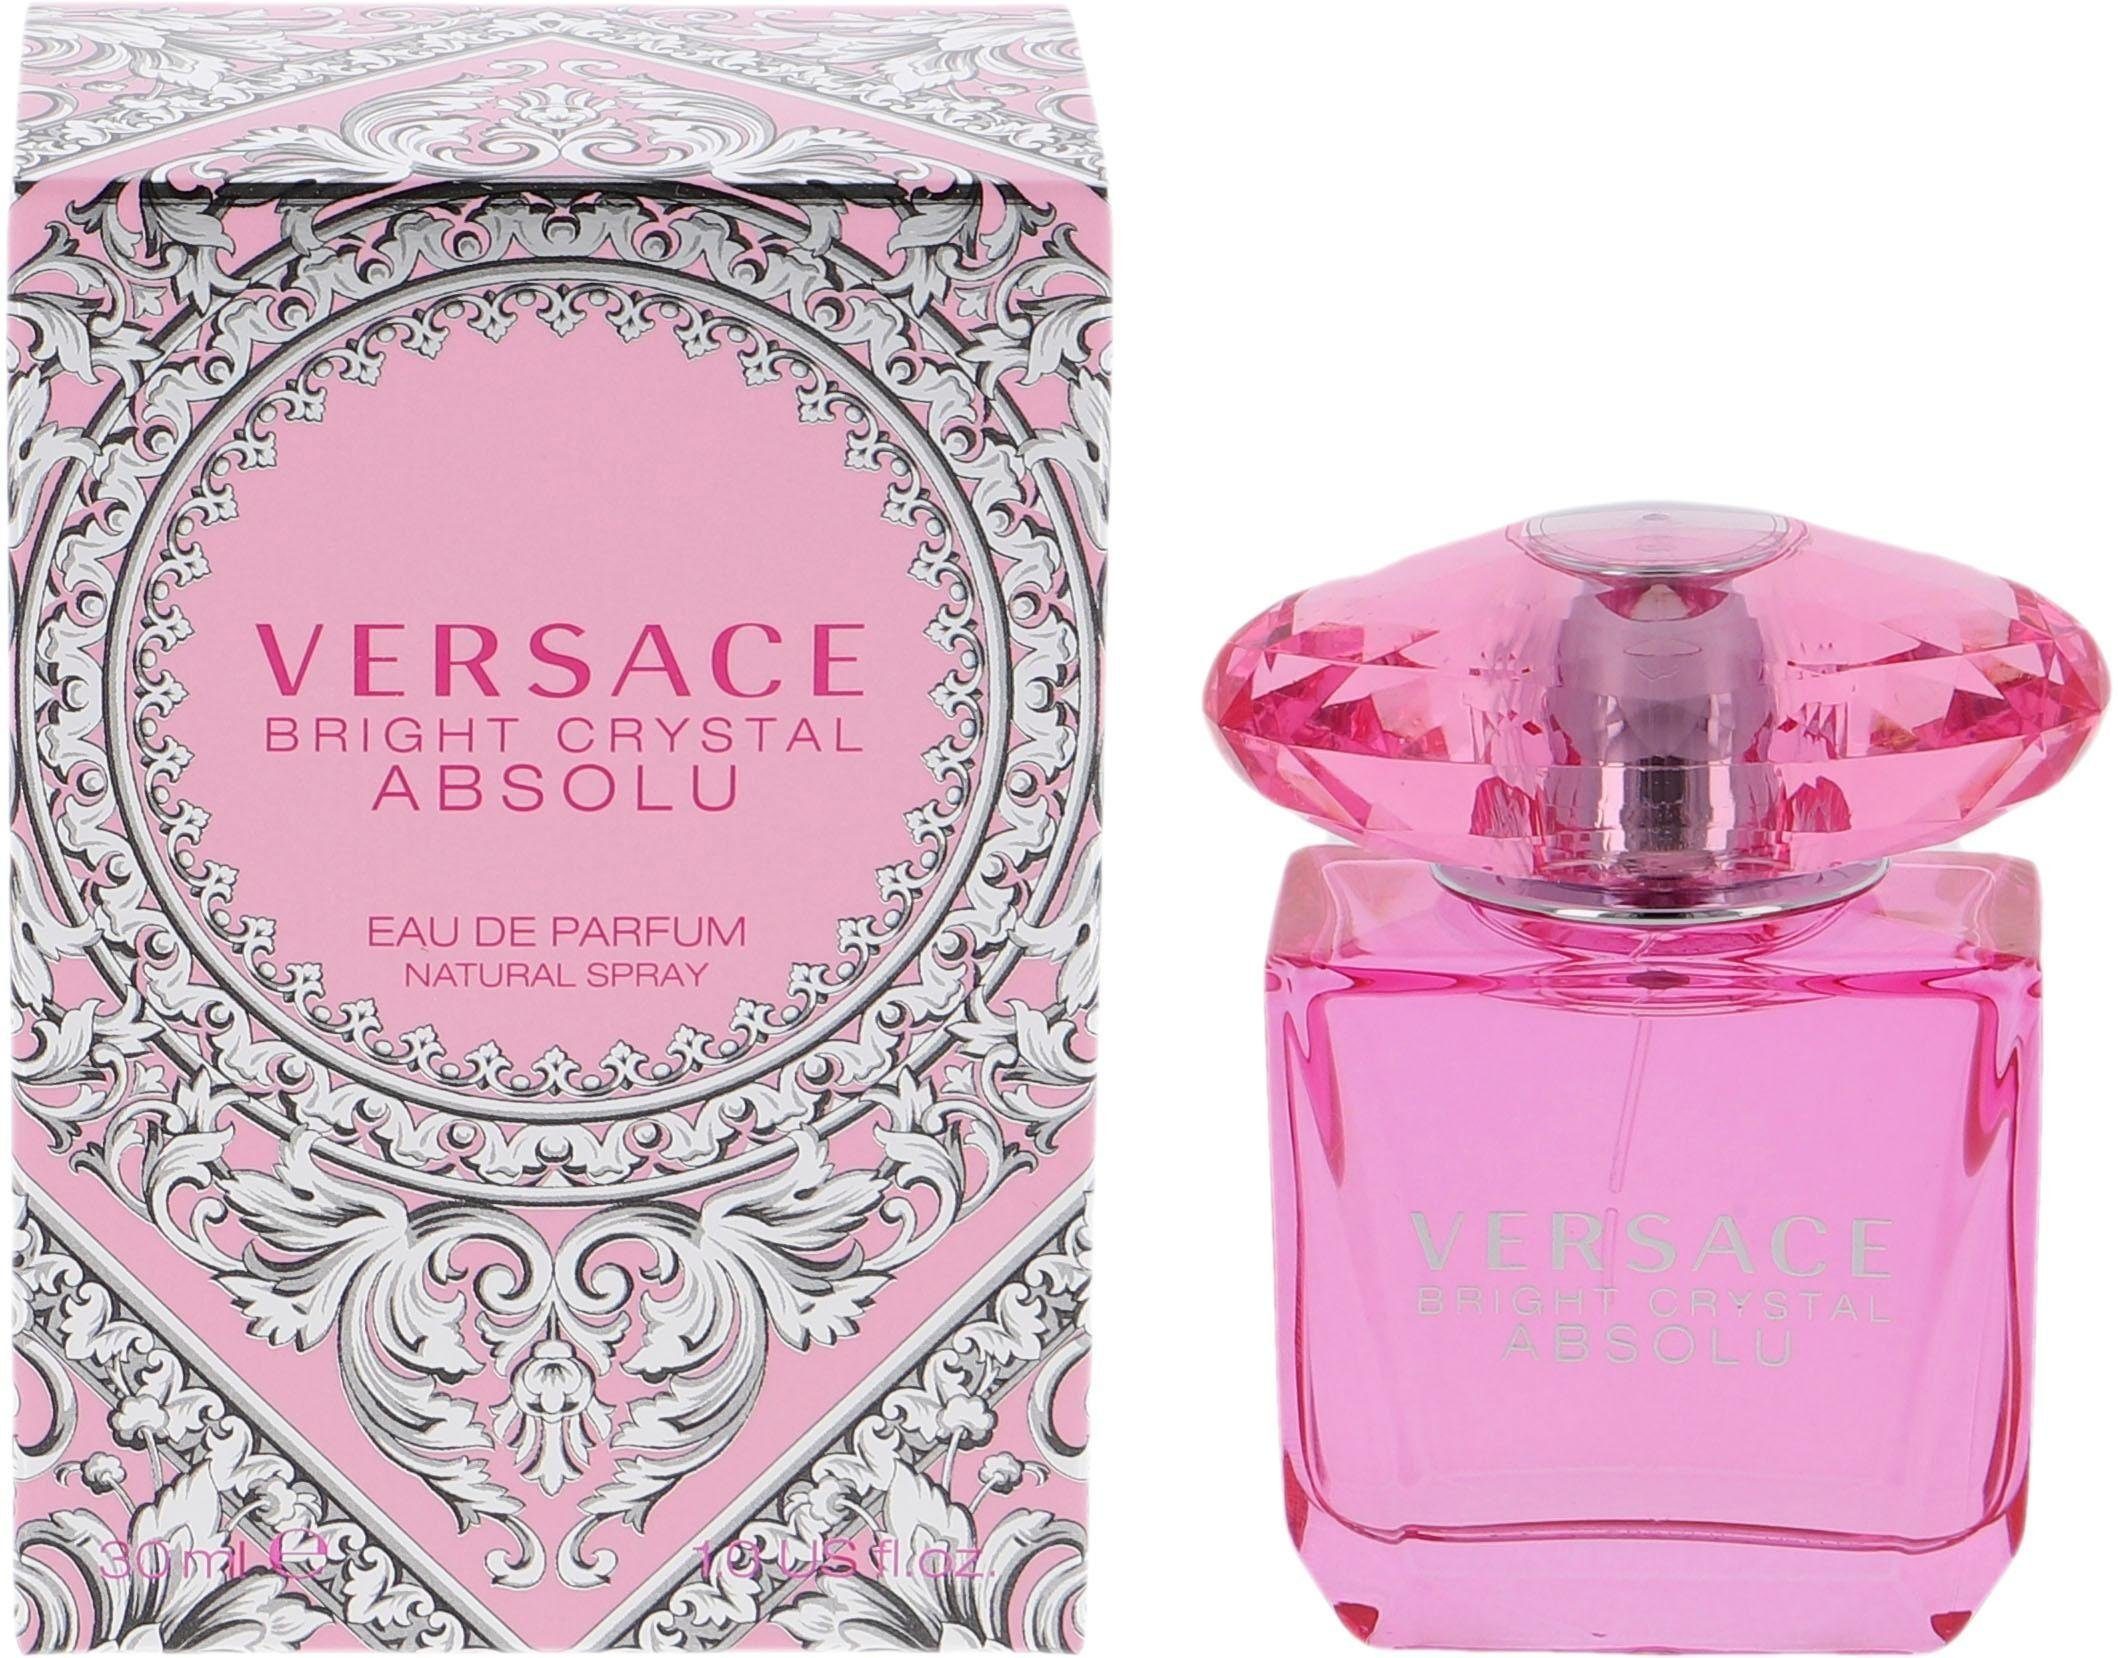 Versace Eau de Parfum Versace Absolu Crystal Bright